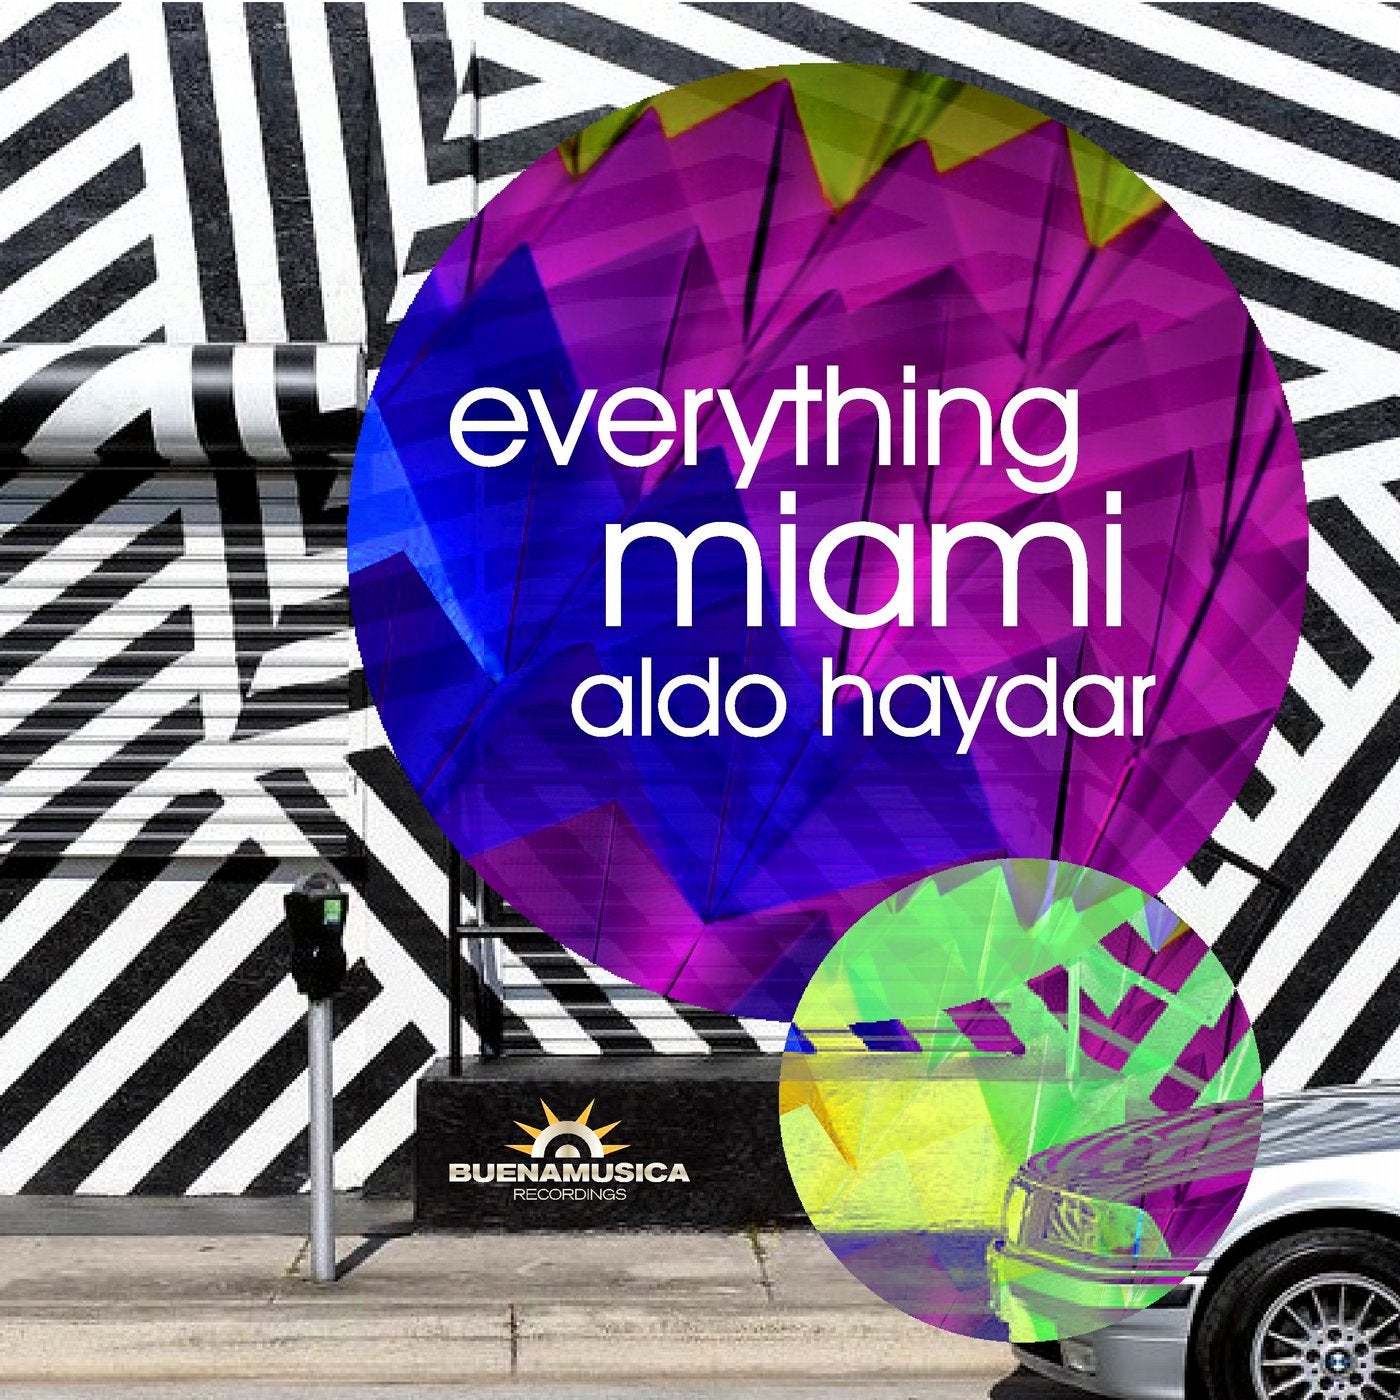 Everything Miami / Aldo Haydar Dj Mix